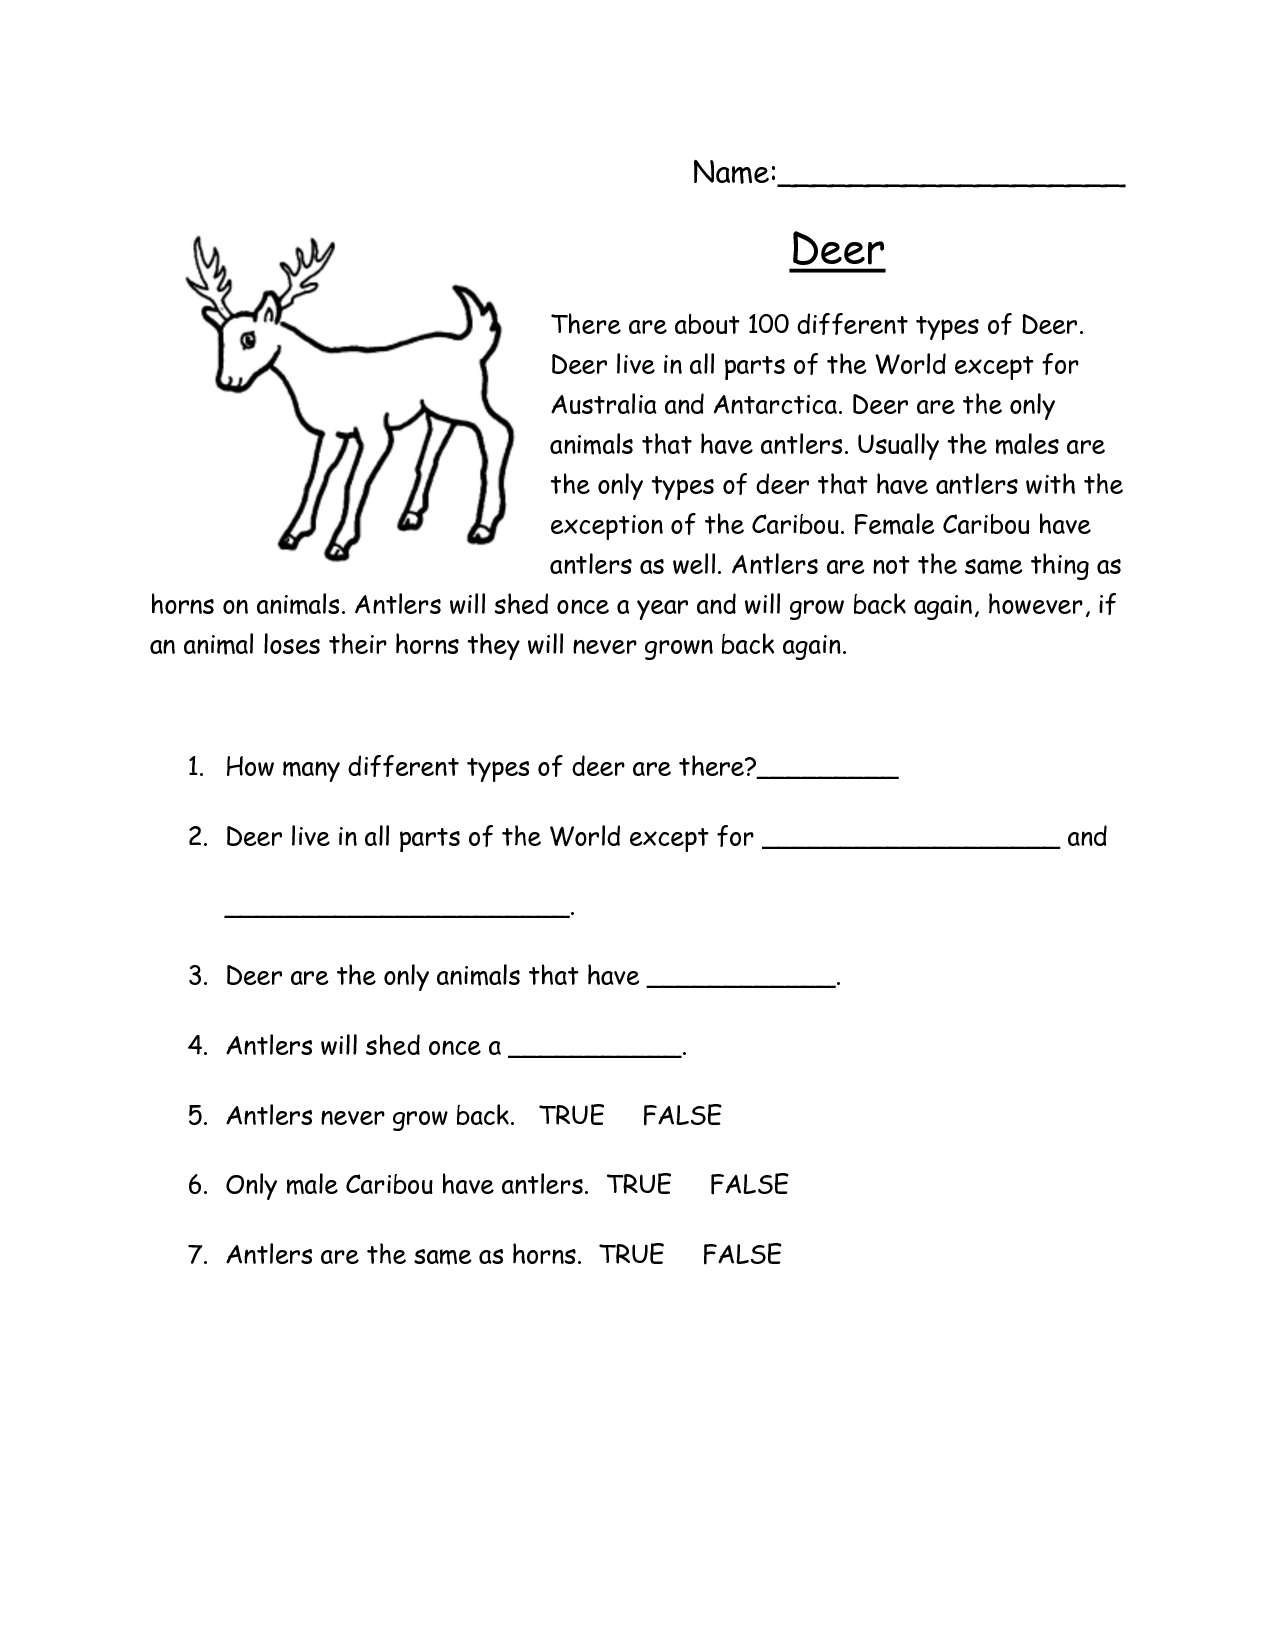 Middle School Reading Comprehension Worksheets Image